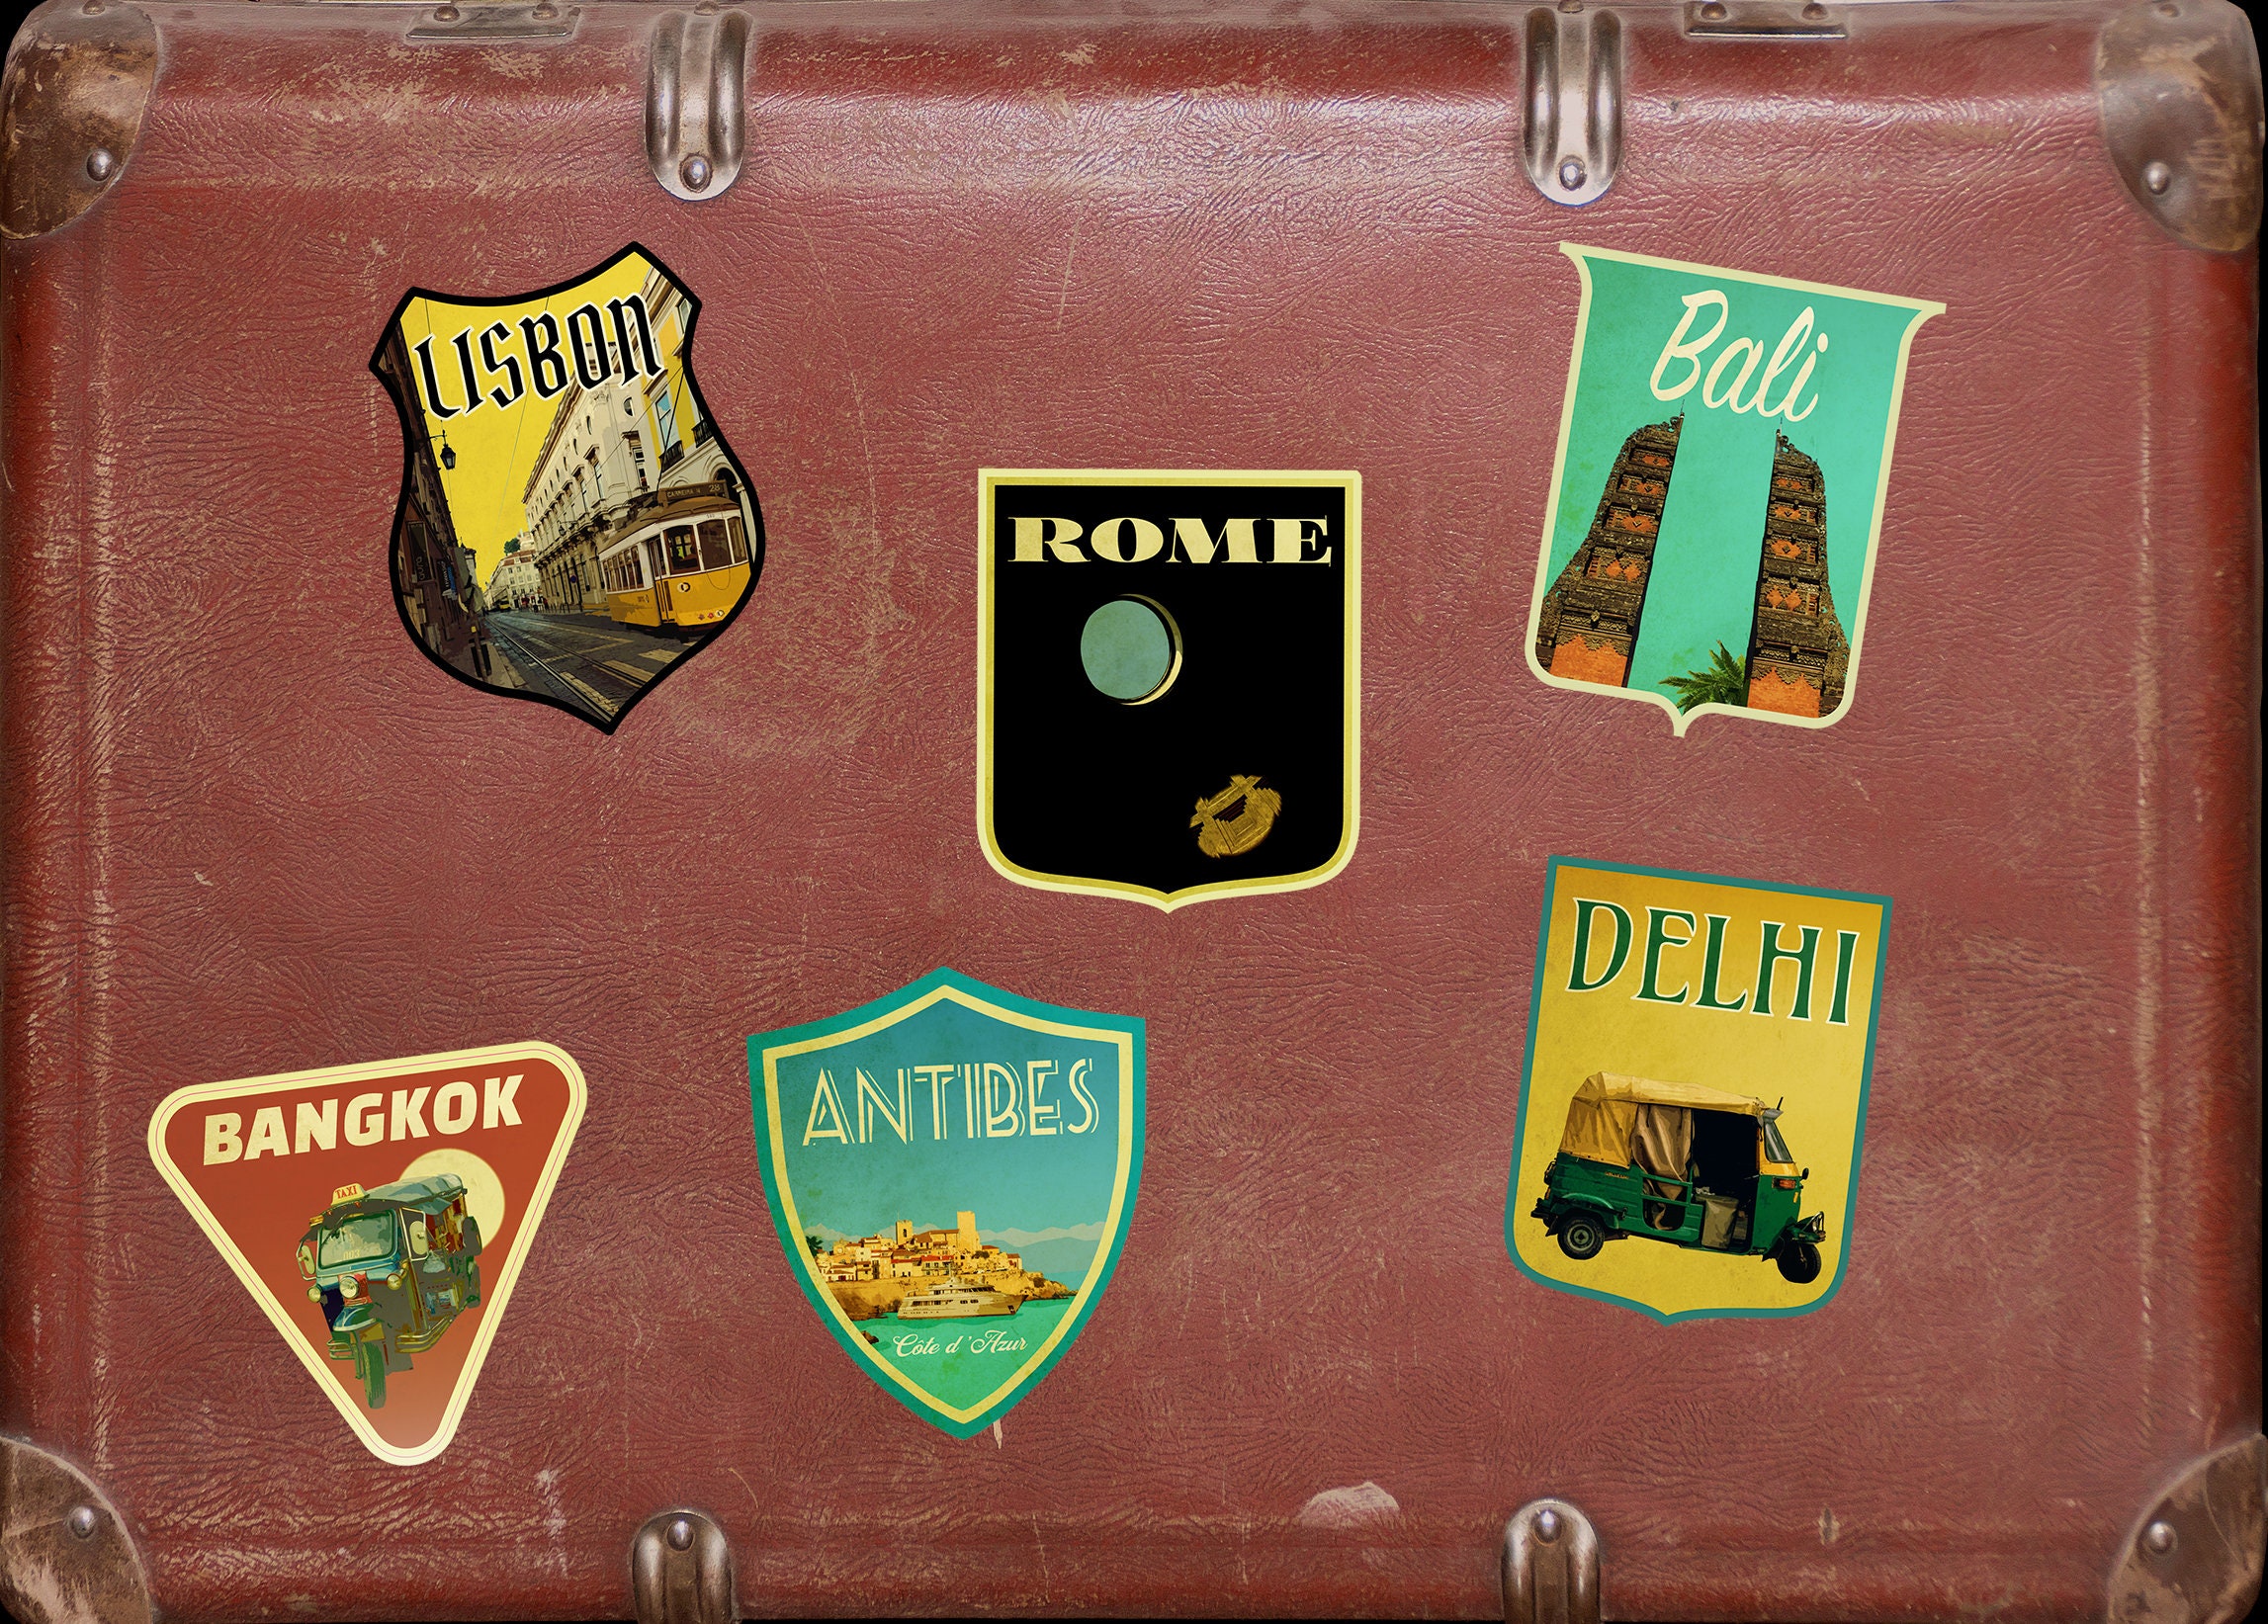 minsda alta calidad equipaje pegatinas maleta parches vintage